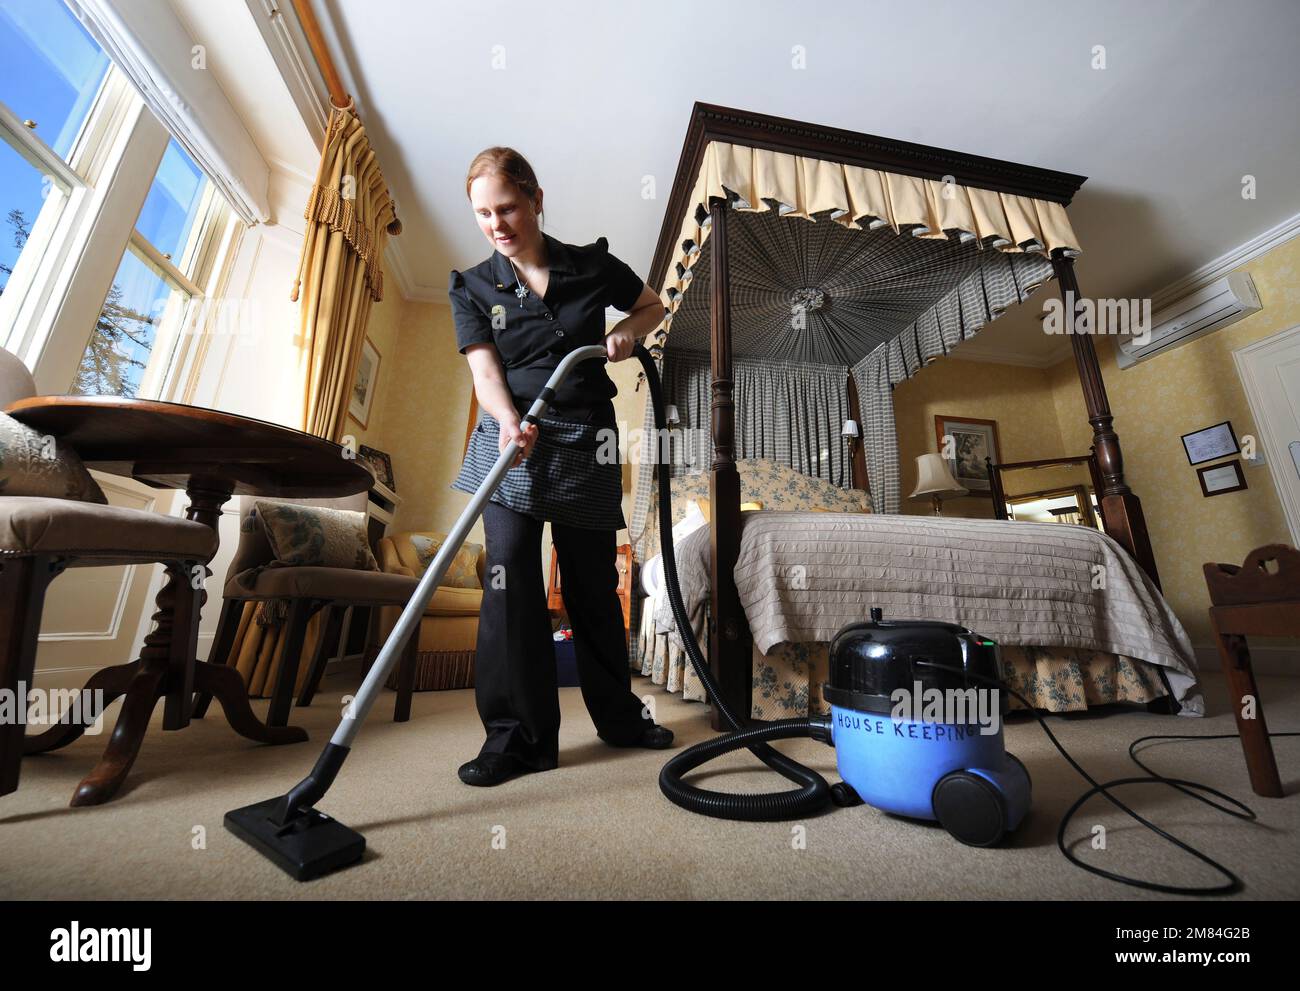 A Housekeeper preparing a hotel room. Stock Photo